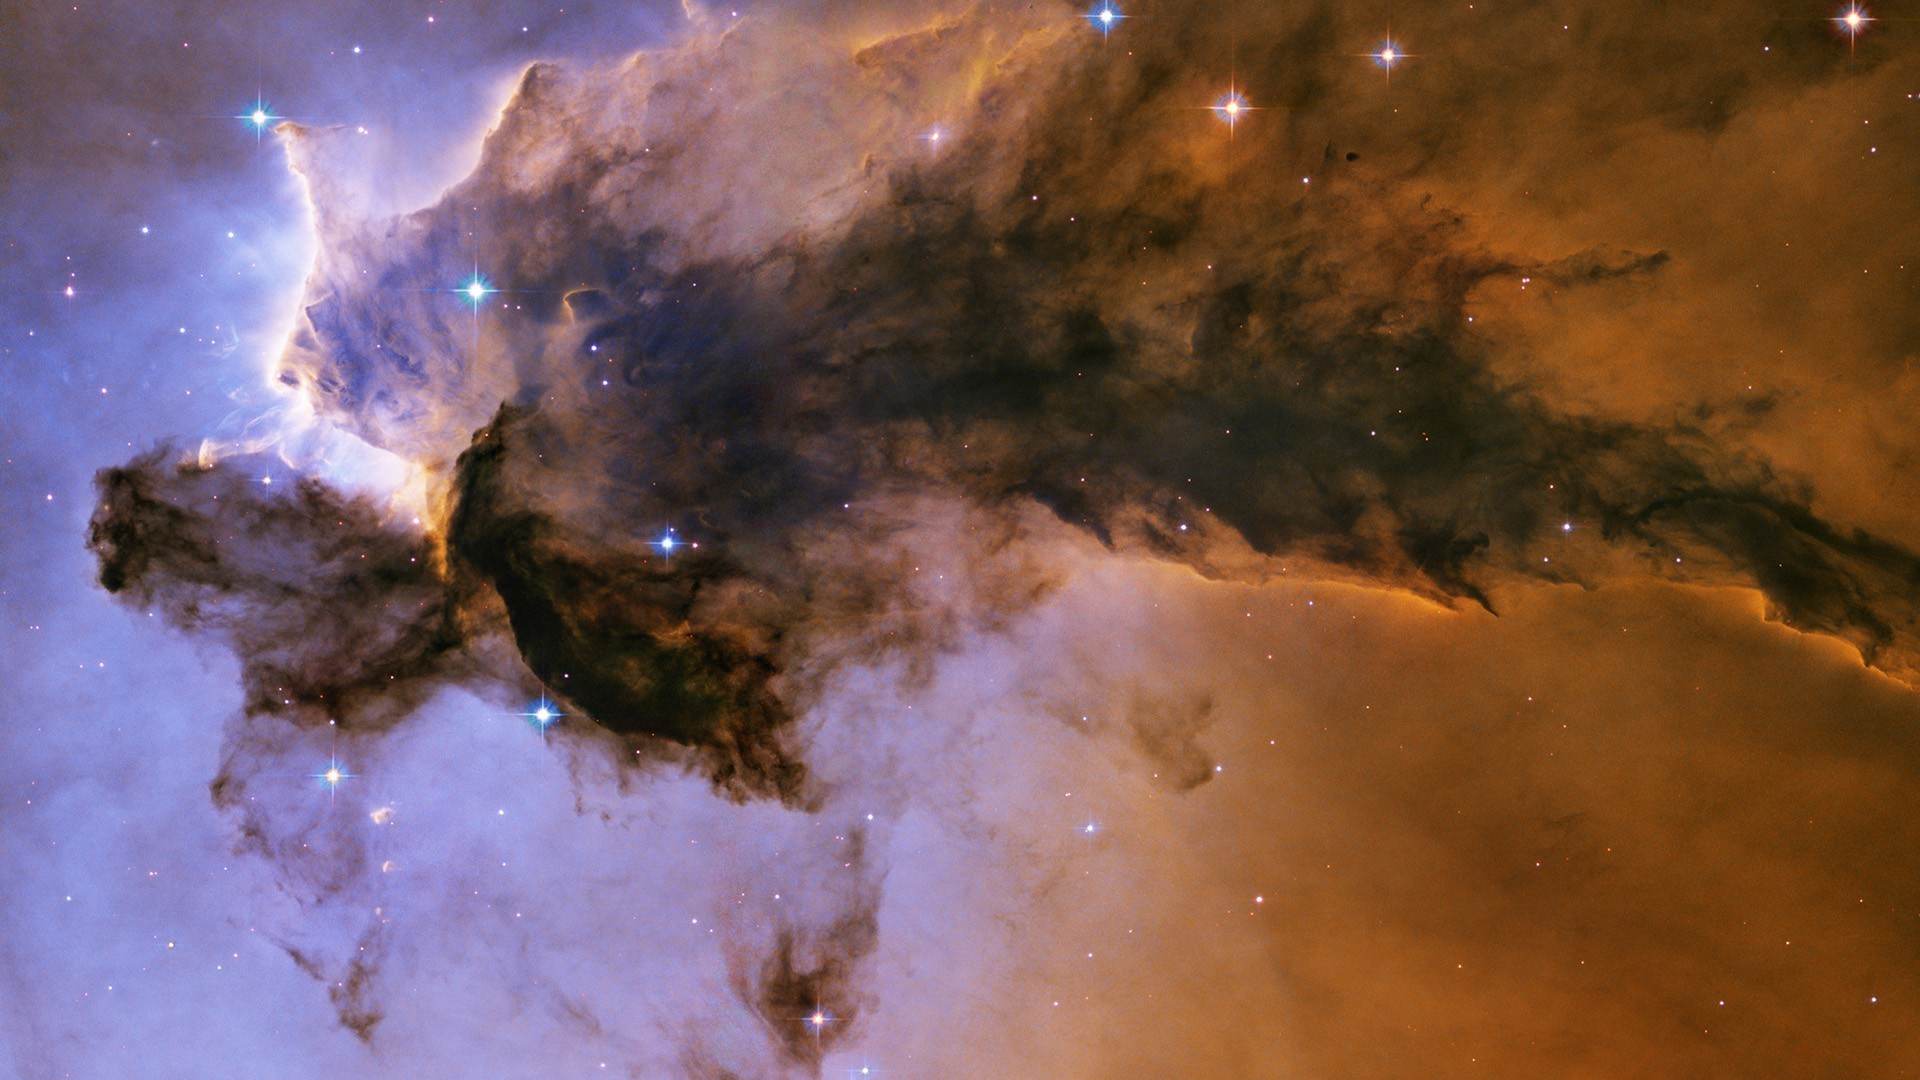 galaxy nebula wallpaper high quality | bzwallpapers.xyz | Pinterest |  Nebula wallpaper and Mac desktop